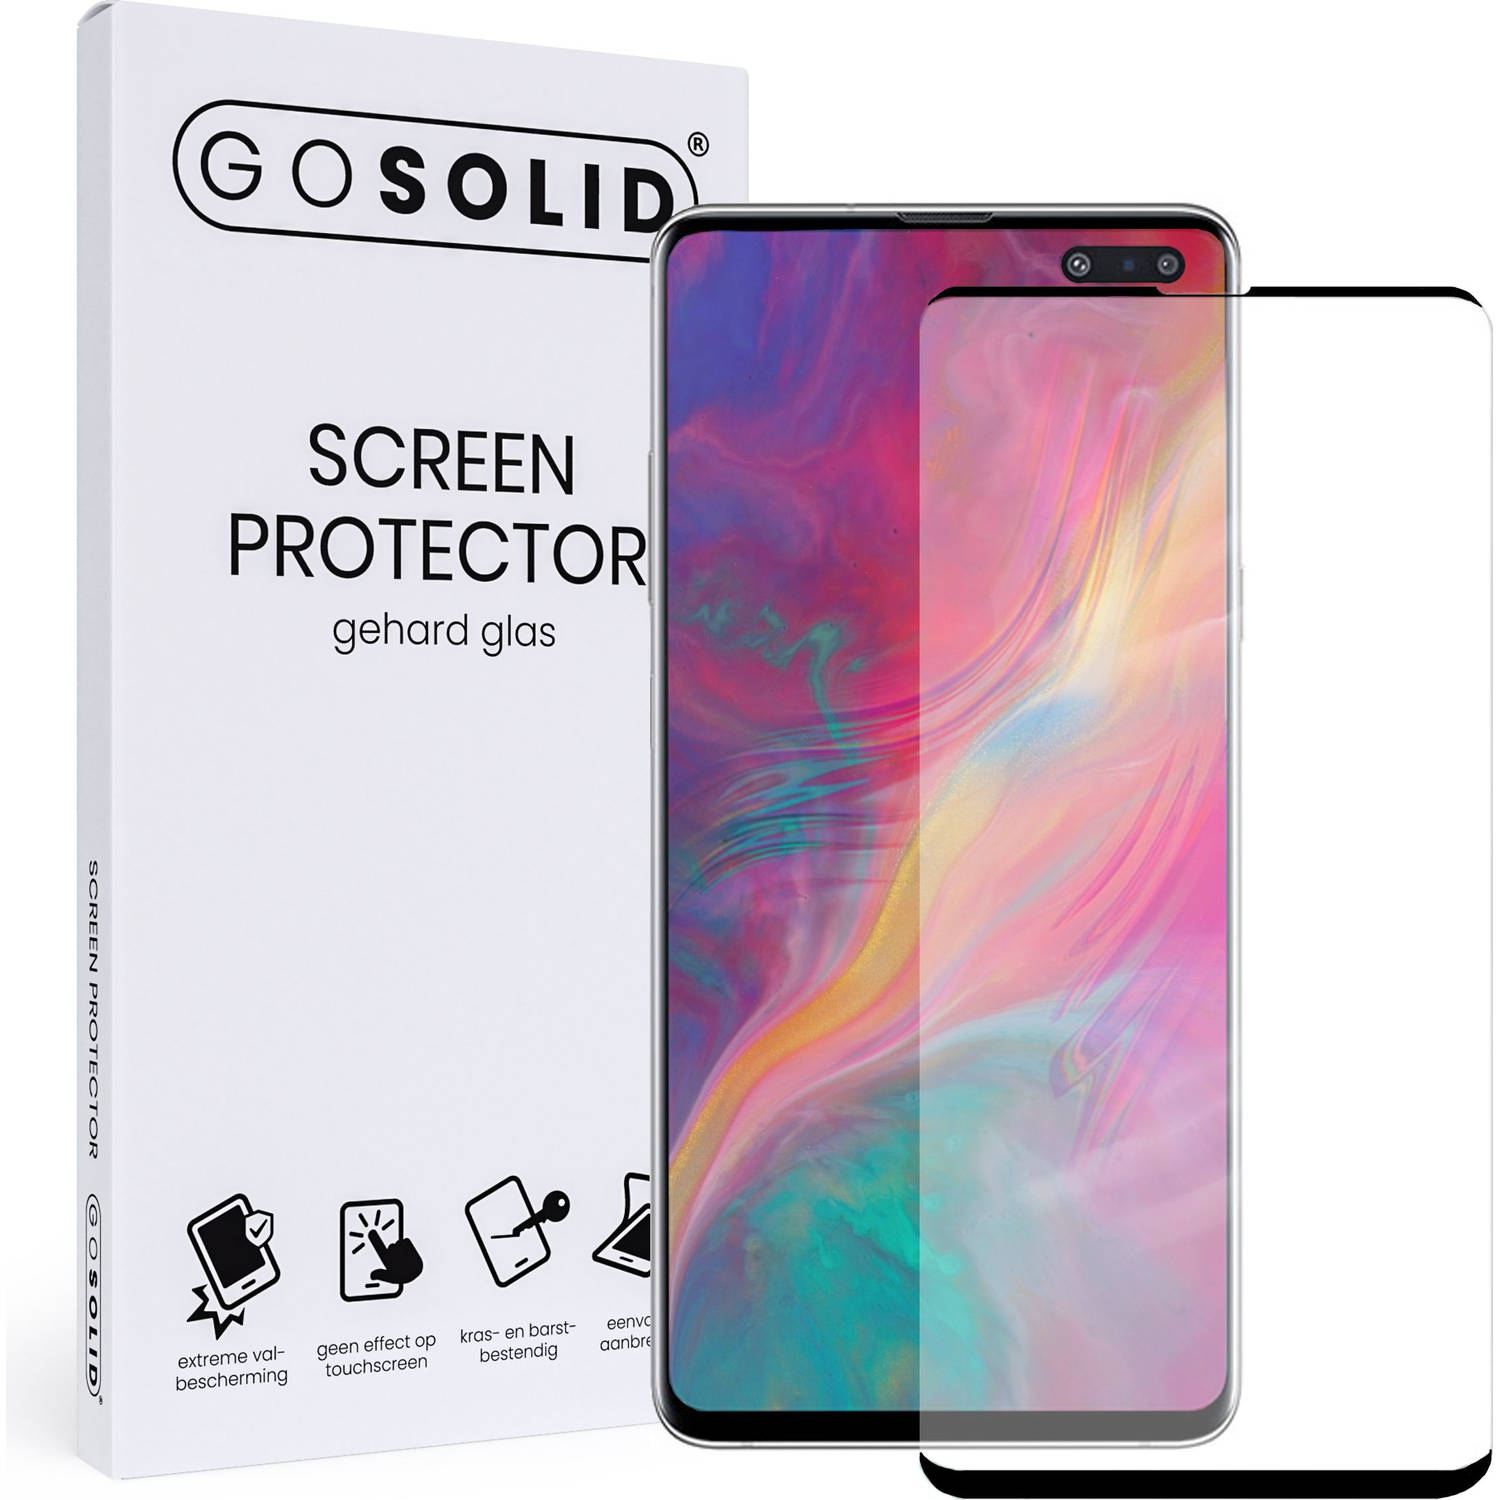 GO SOLID! Screenprotector voor Samsung Galaxy S10 5G